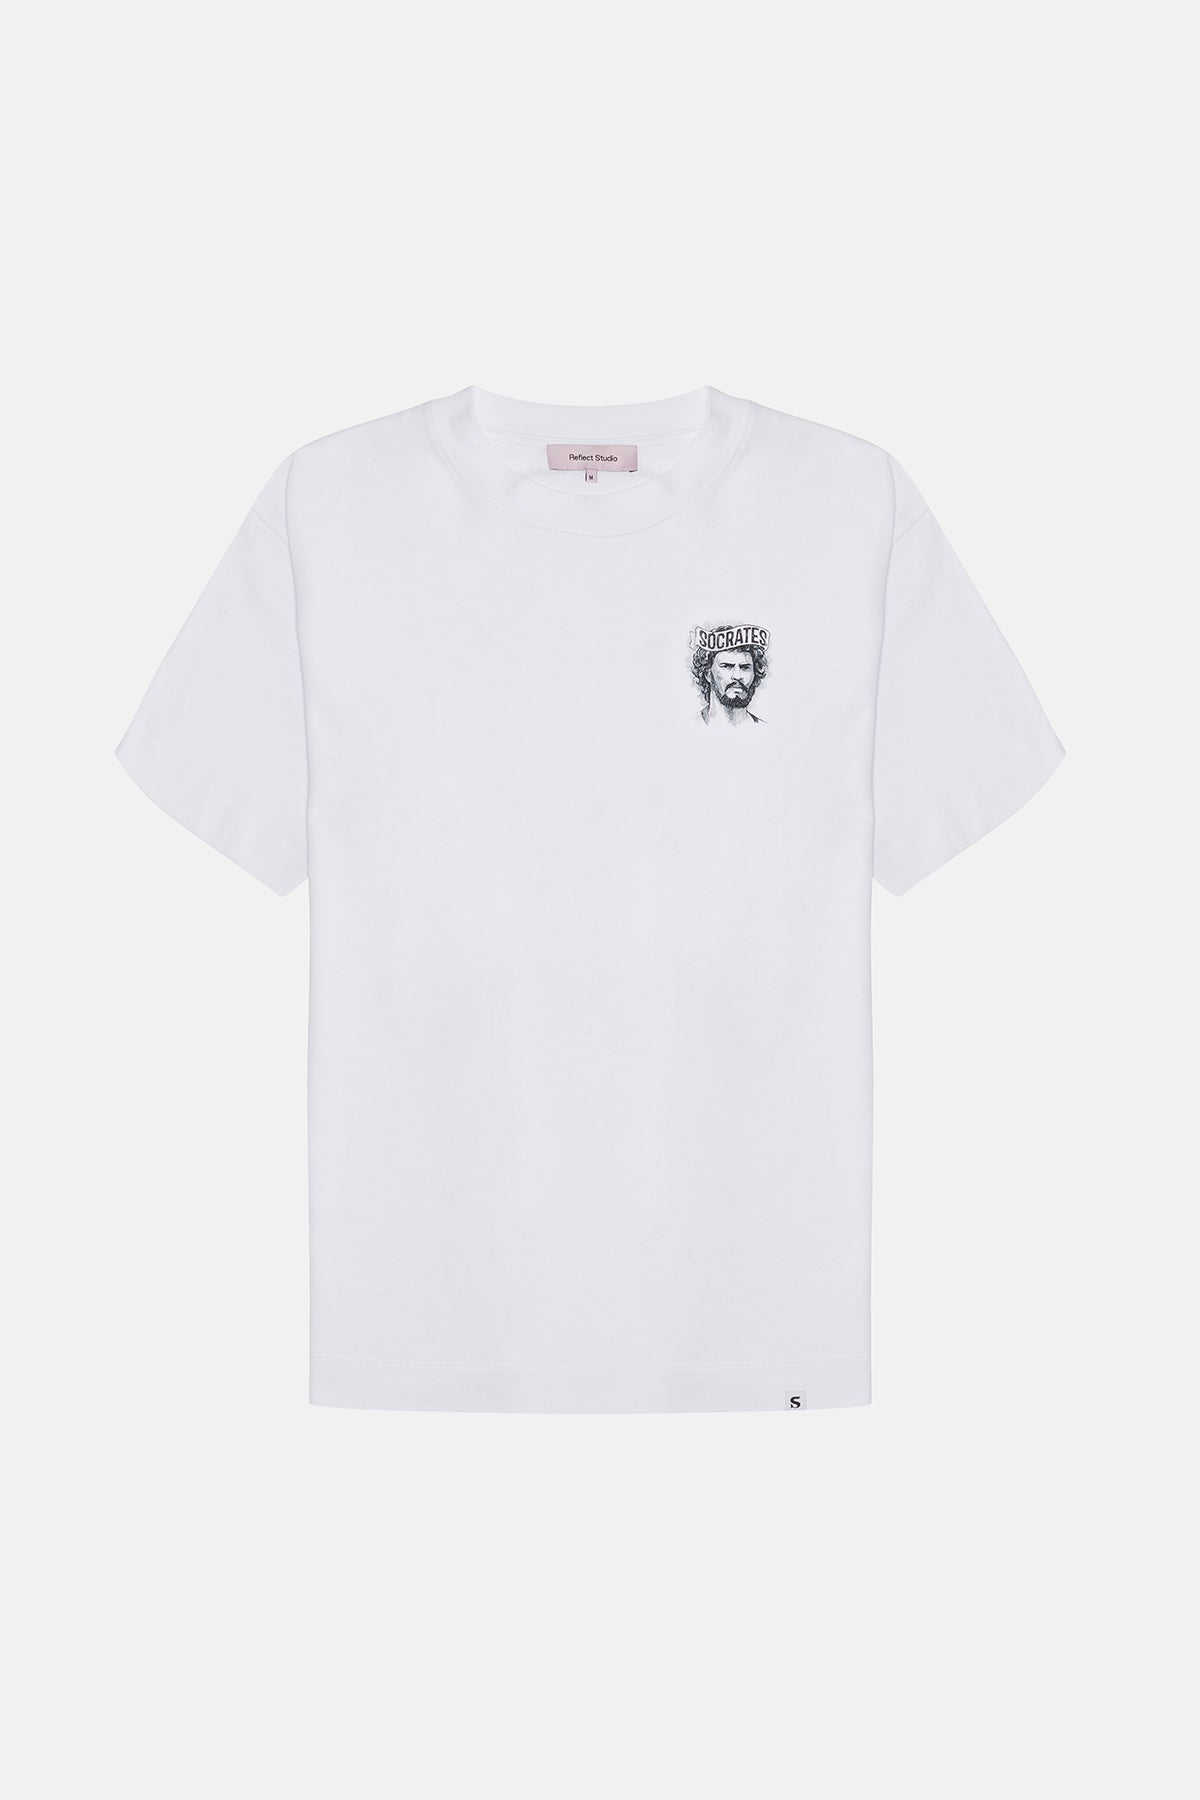 Dr. Socrates Supreme T-Shirt - Beyaz